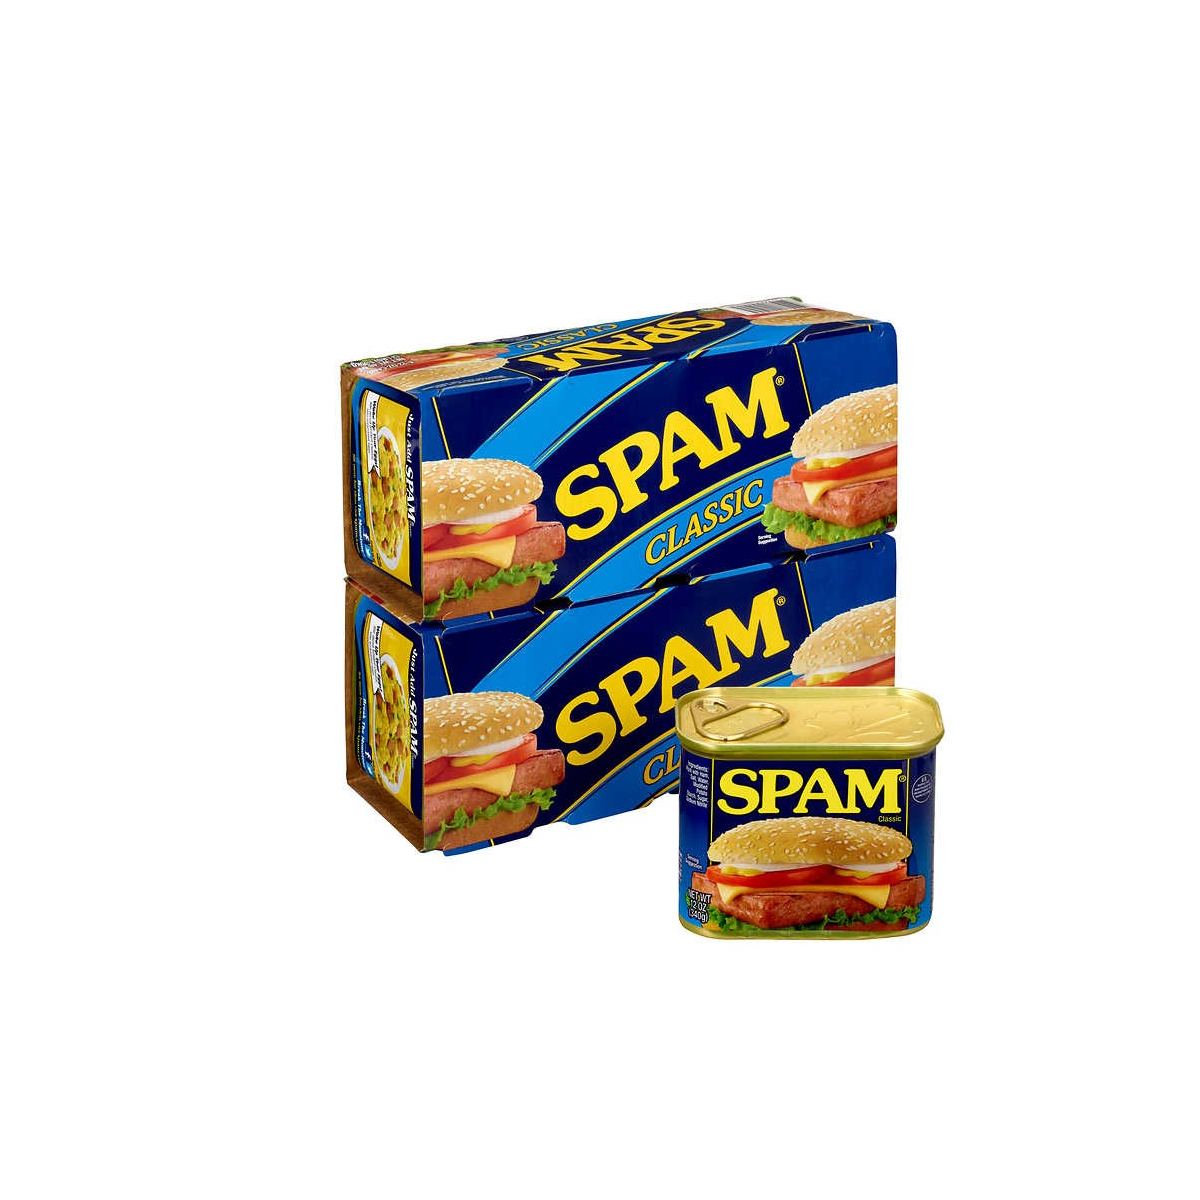  Thịt hộp Spam classic 6lbs/ 8 hộp 